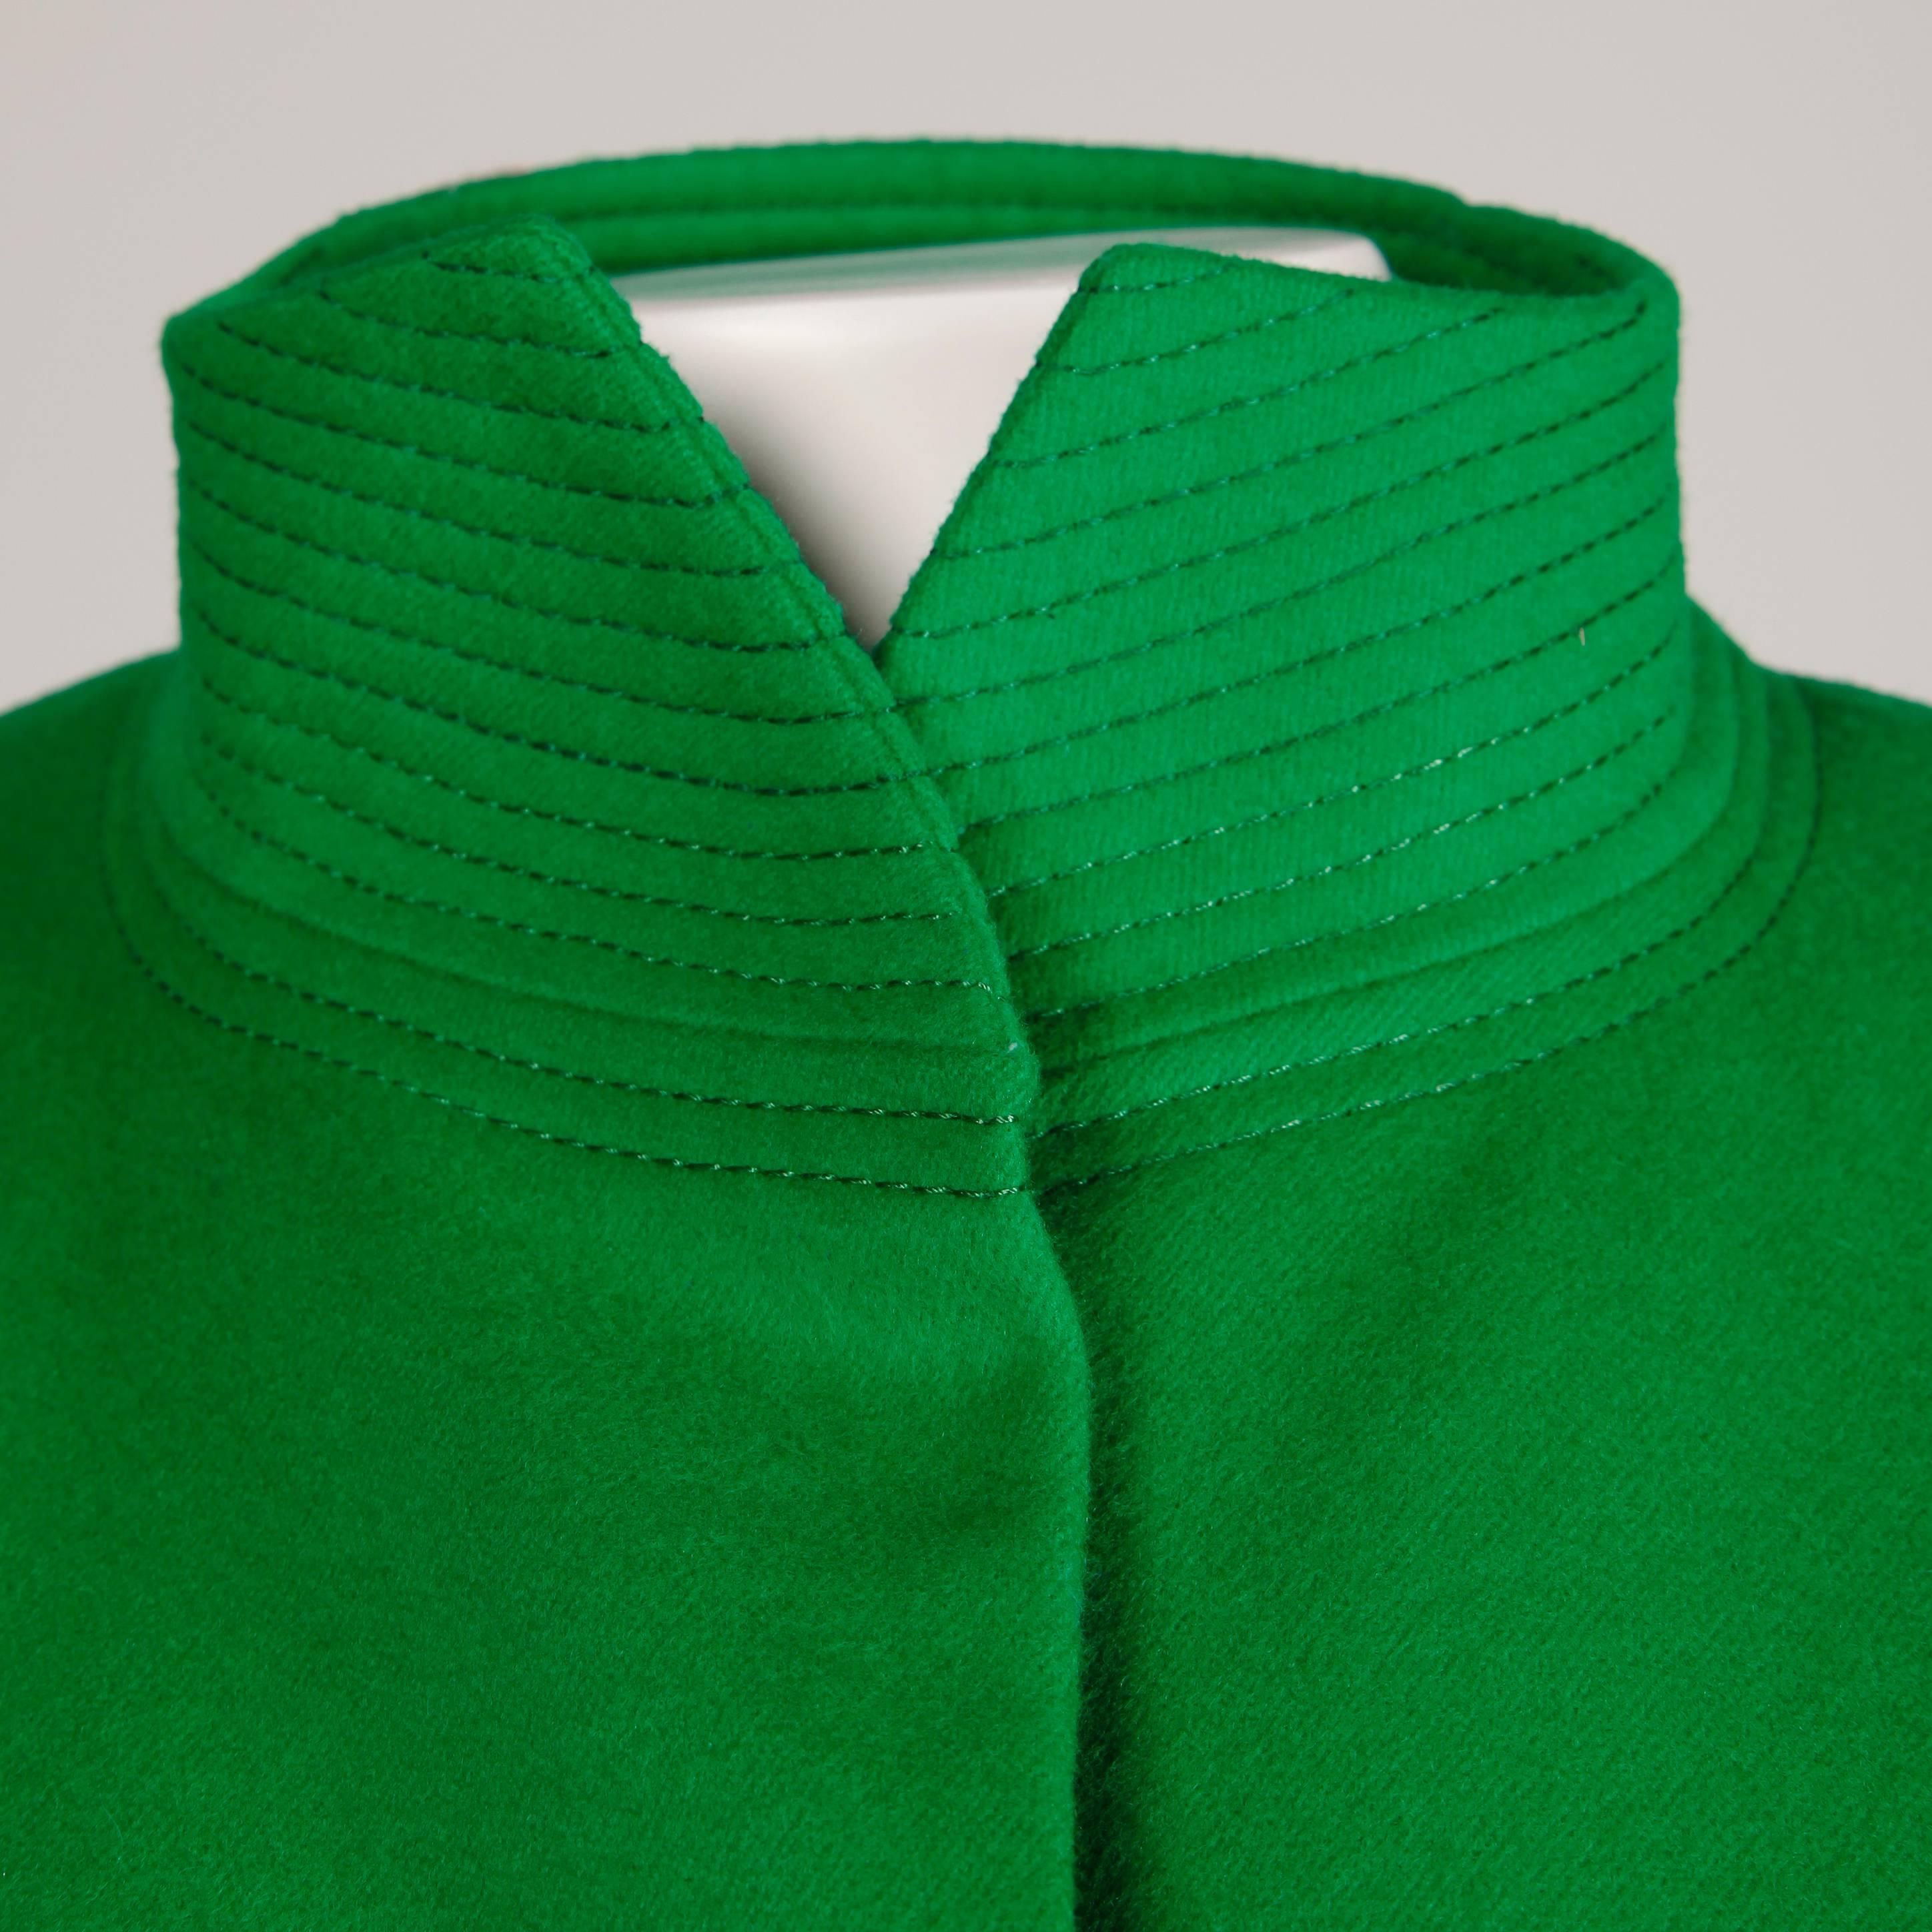 Galanos 1980s Vintage Avant Garde Kelly Green Wool Coat with Bold Shoulders 1